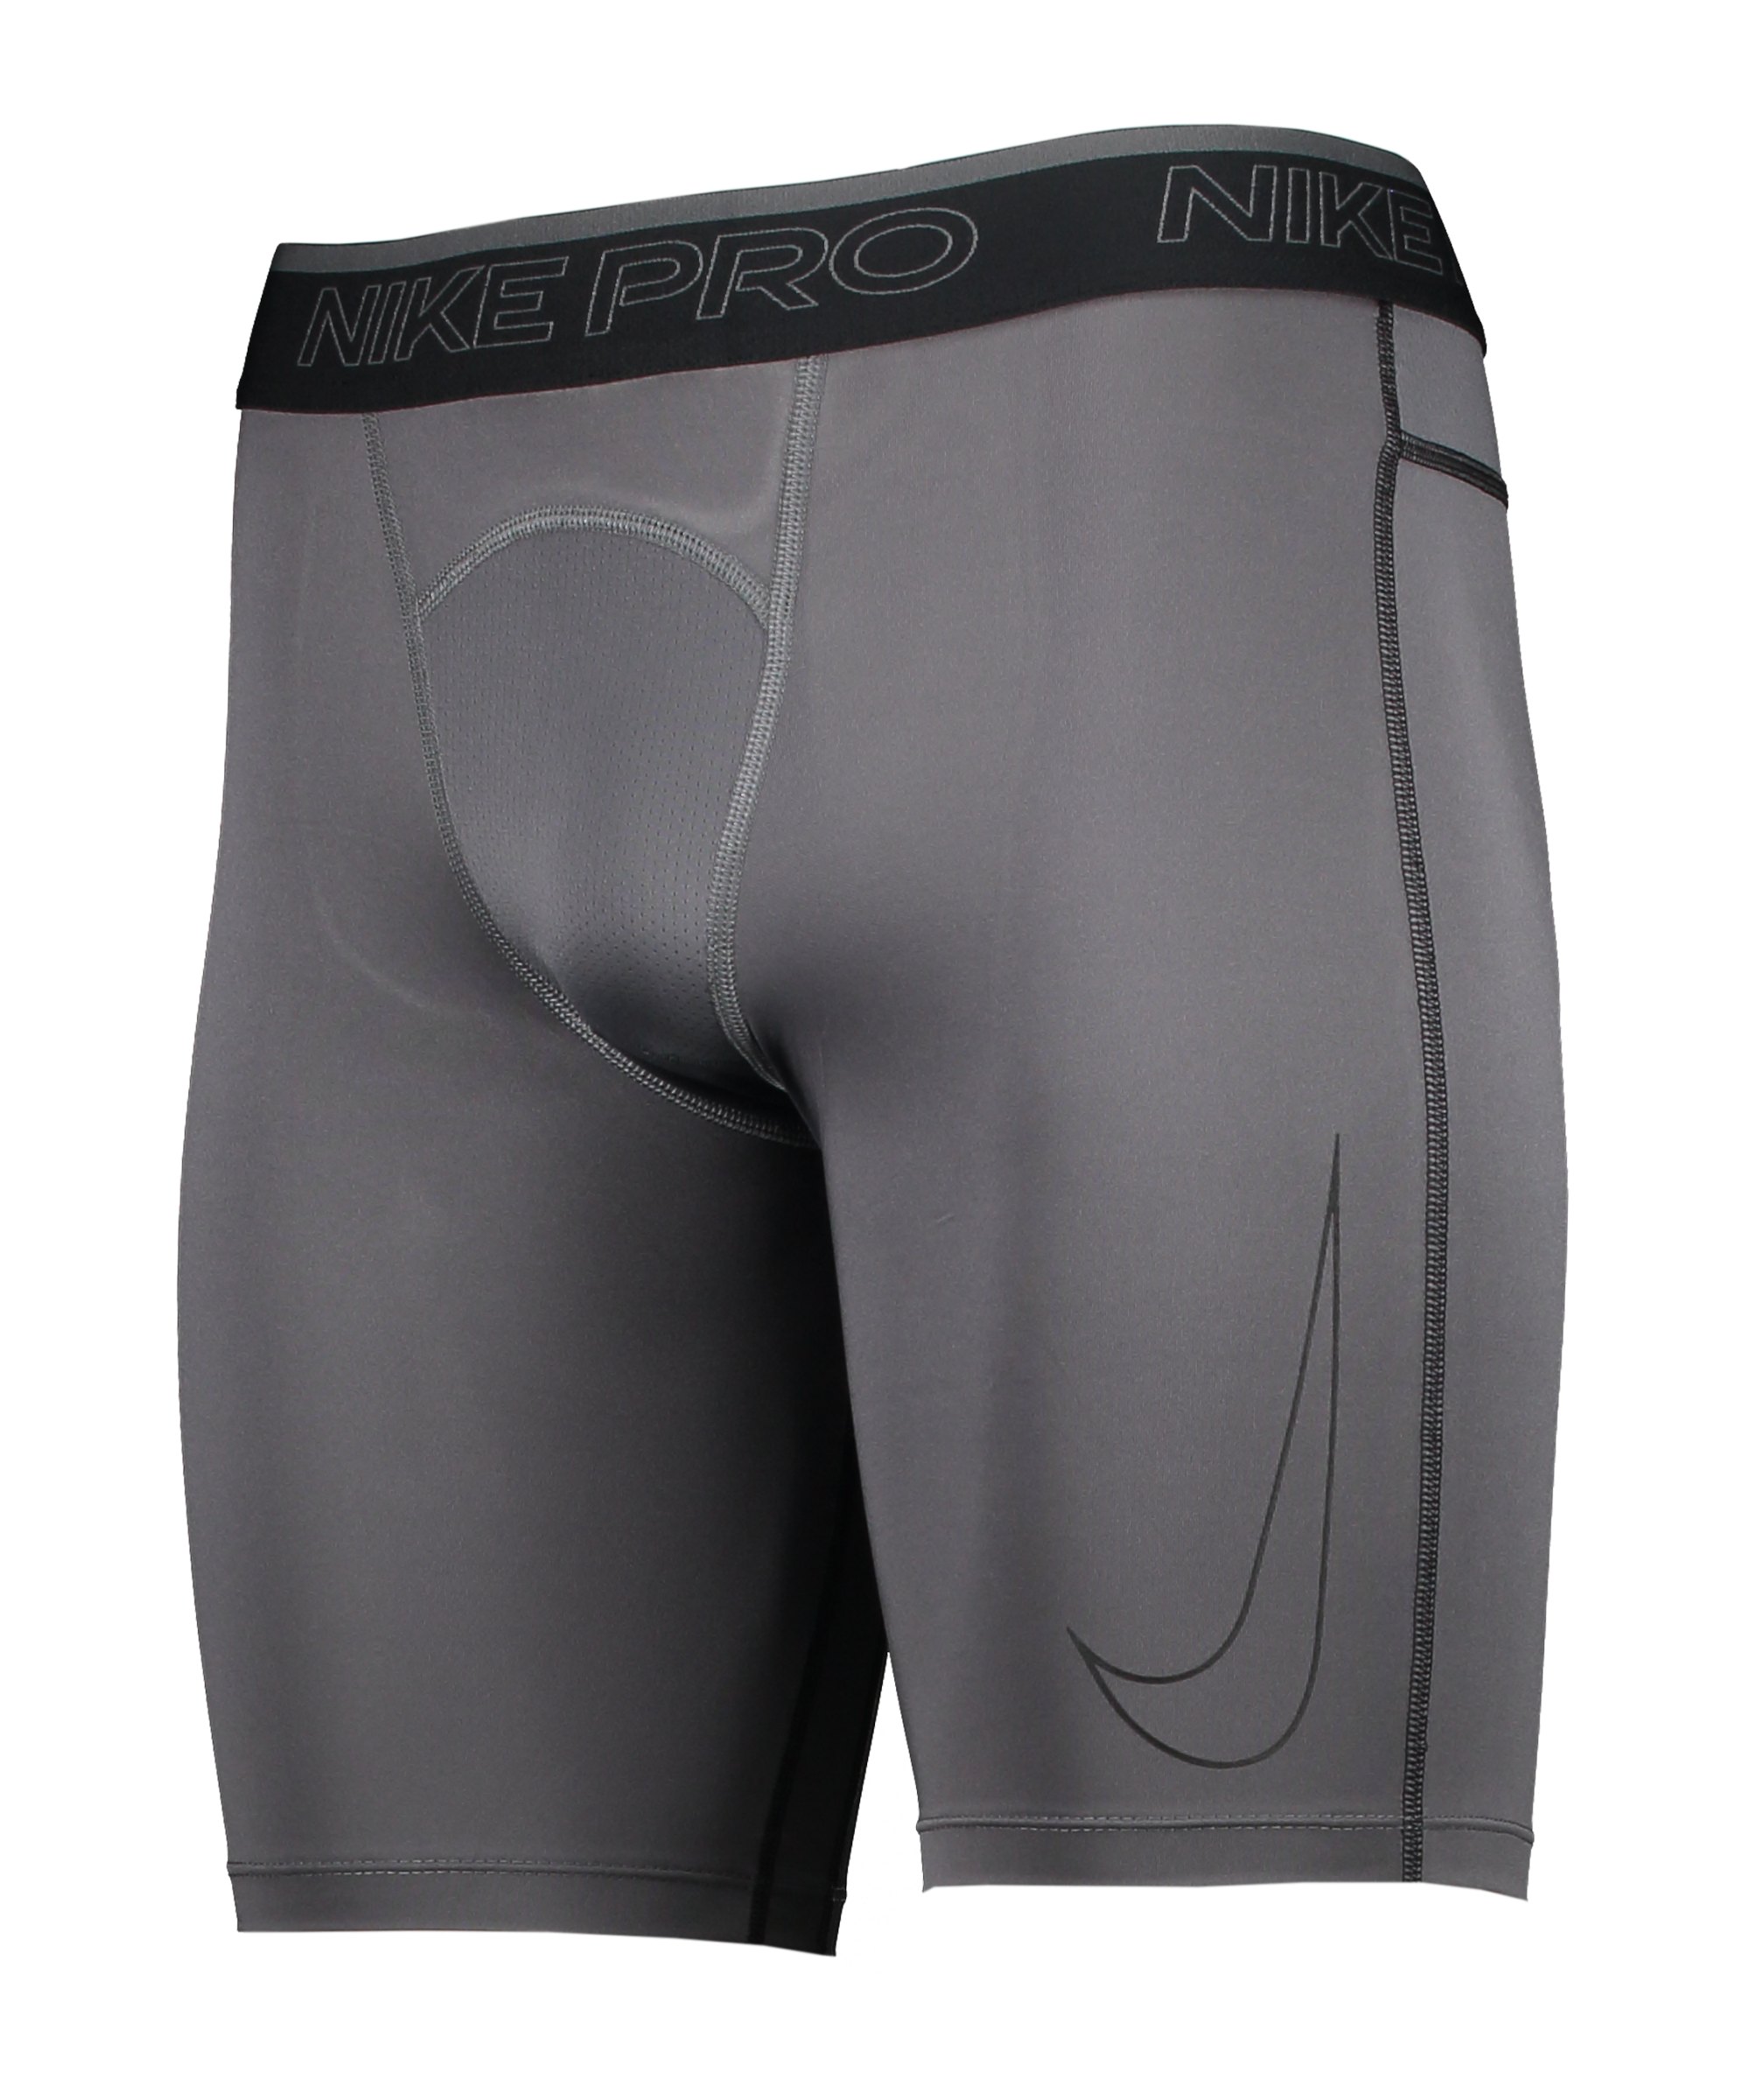 Nike Pro Long Short Grau Schwarz F068 - grau